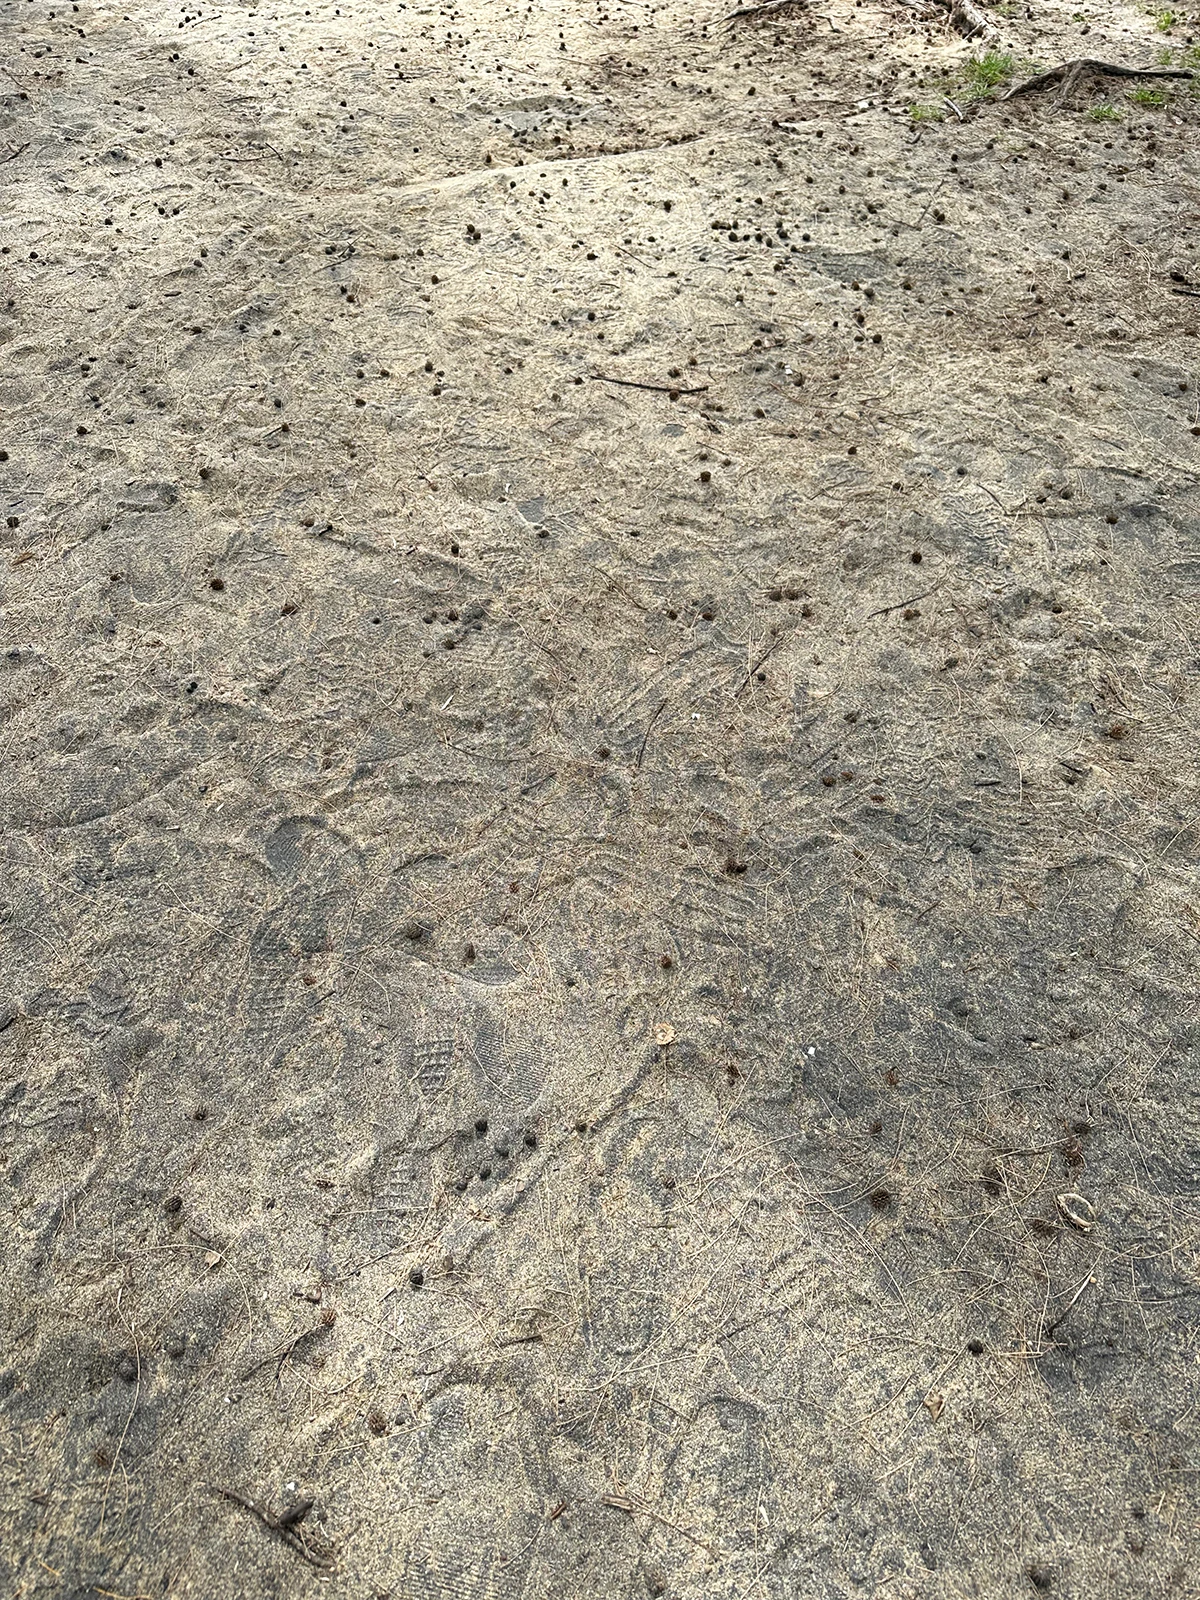 black sand beach khao lak sand with footprints